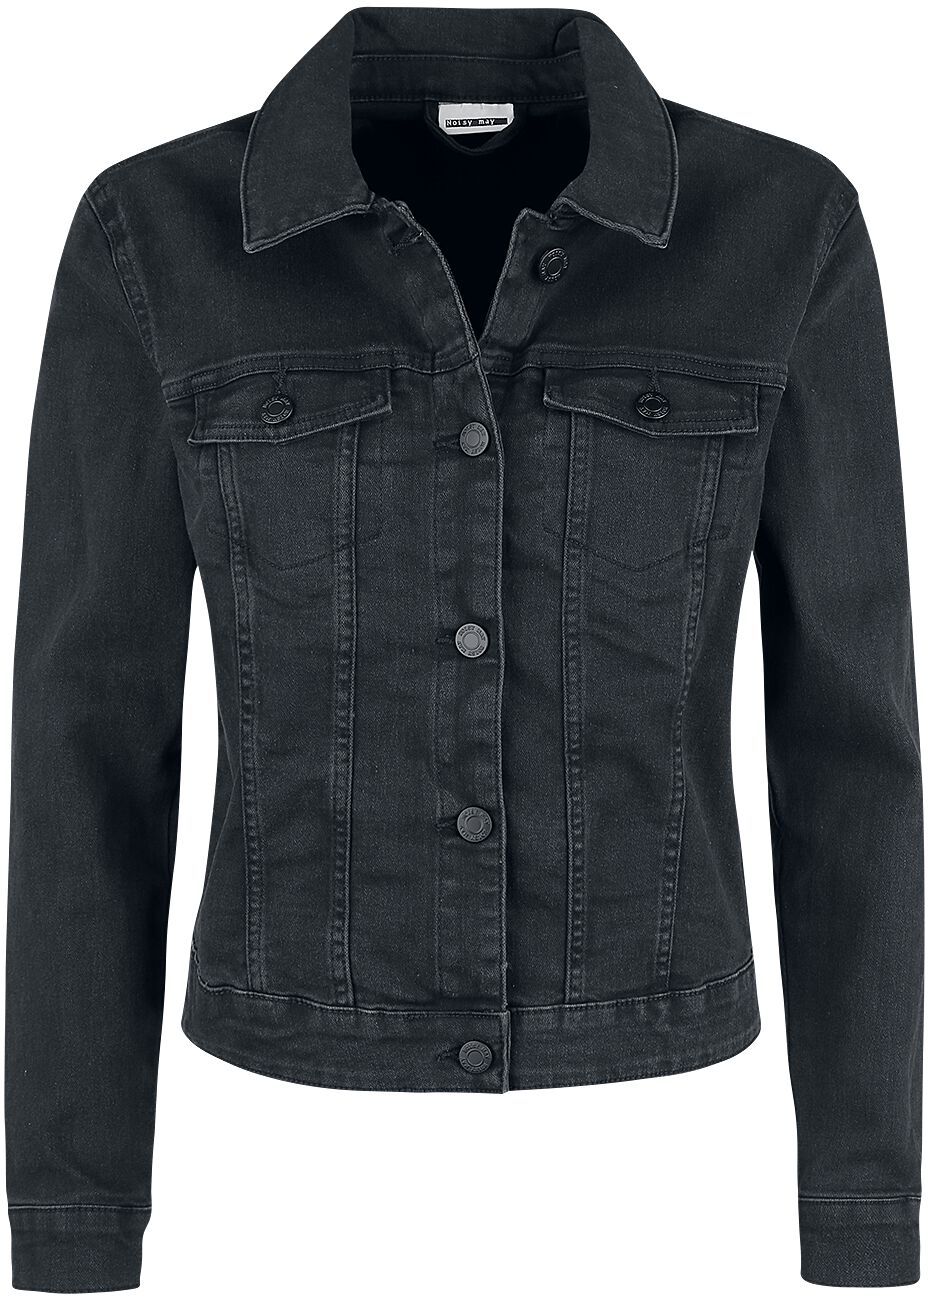 Debra Black Wash Denim Jacket | Noisy May Jeans Jacket | EMP